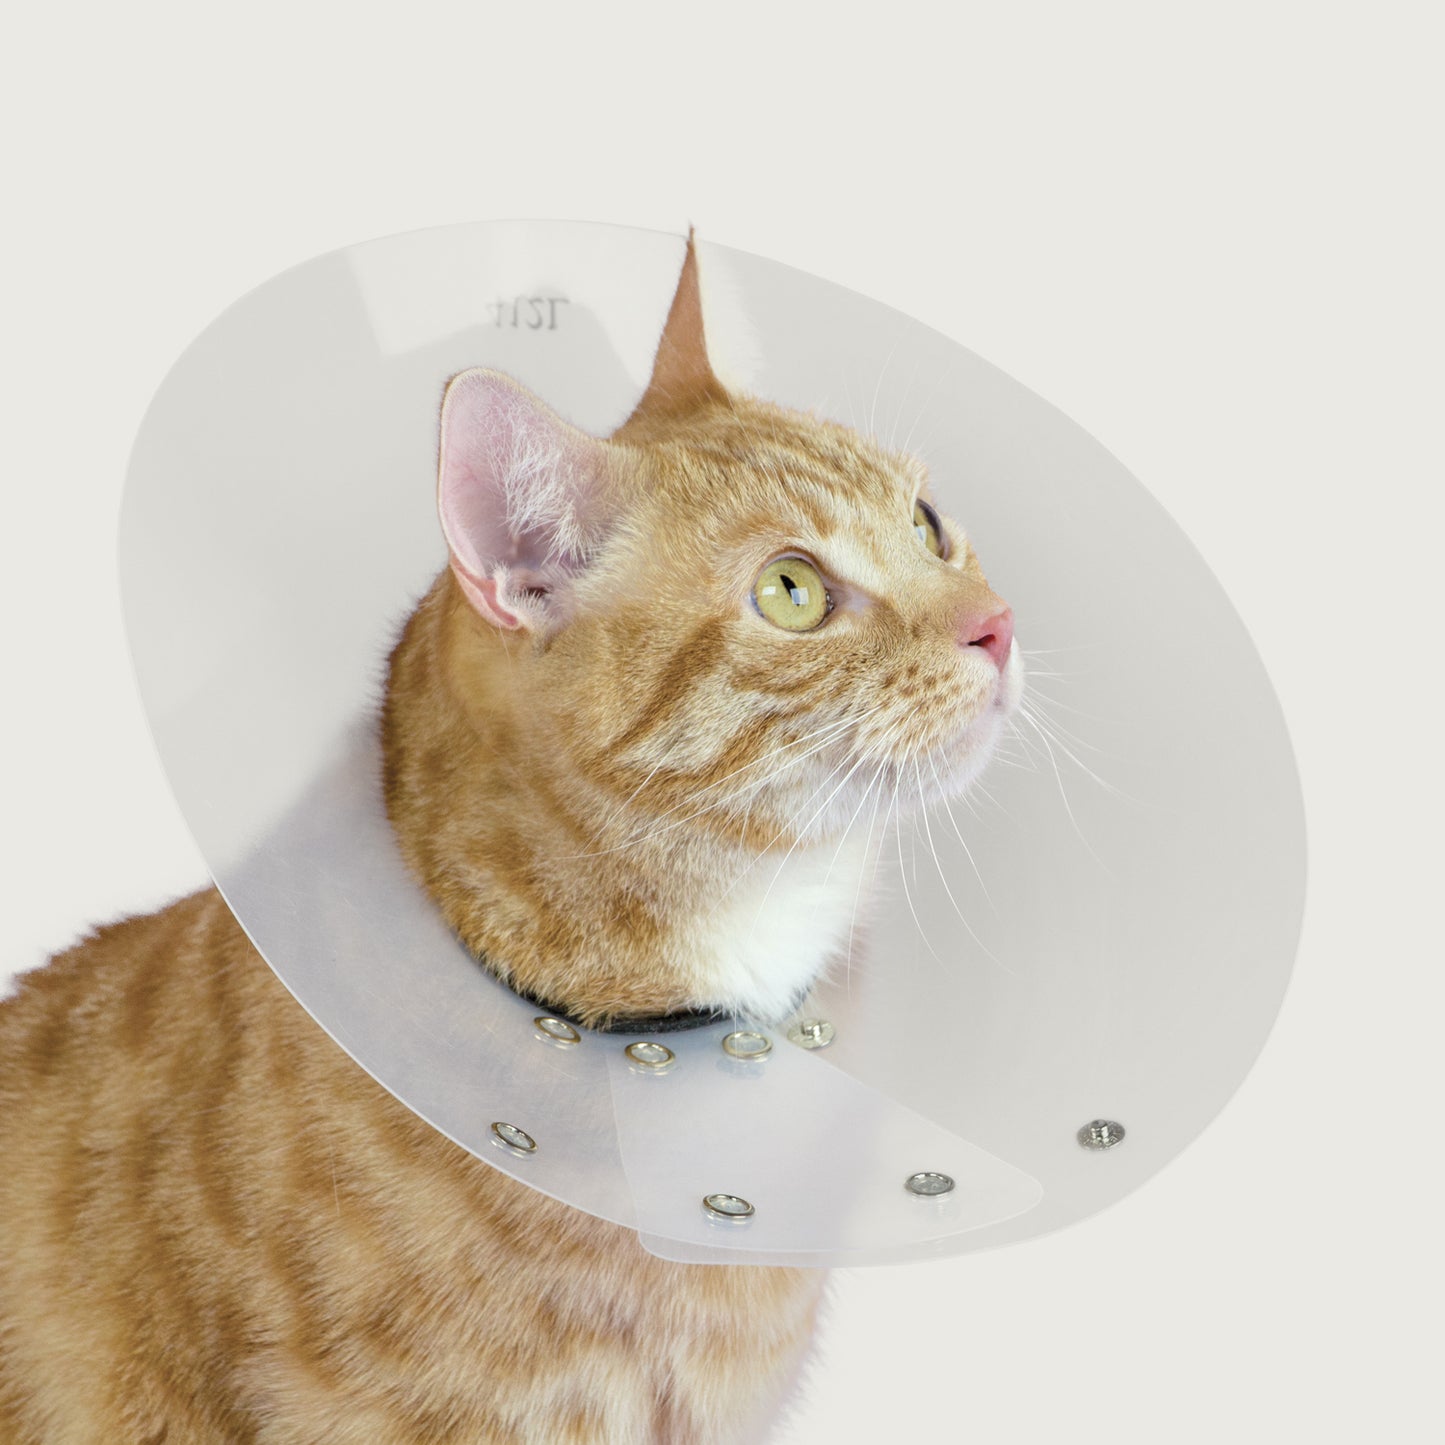 cat wearing a saf t shield collar